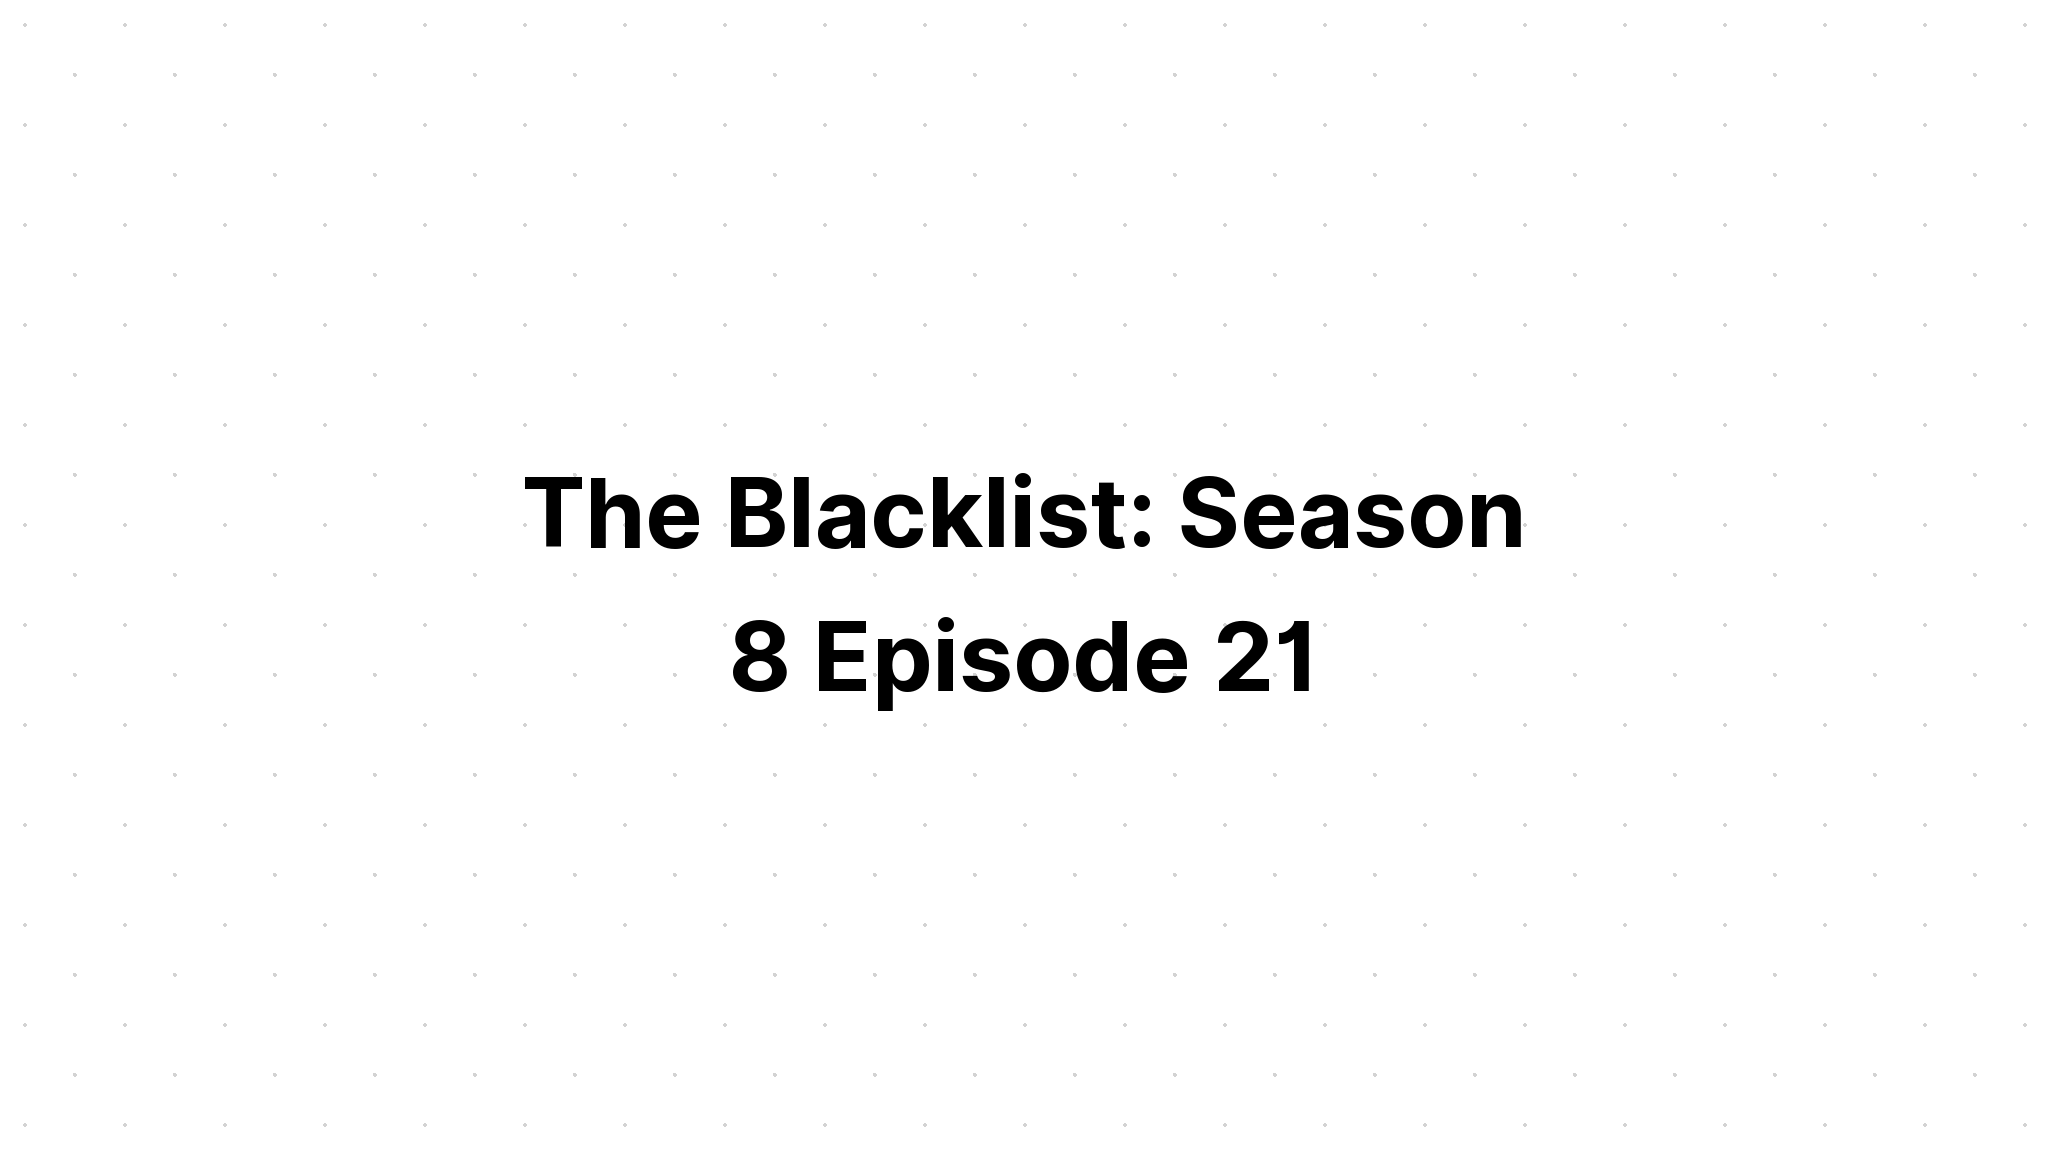 Episode season 21 blacklist 8 the THE BLACKLIST: